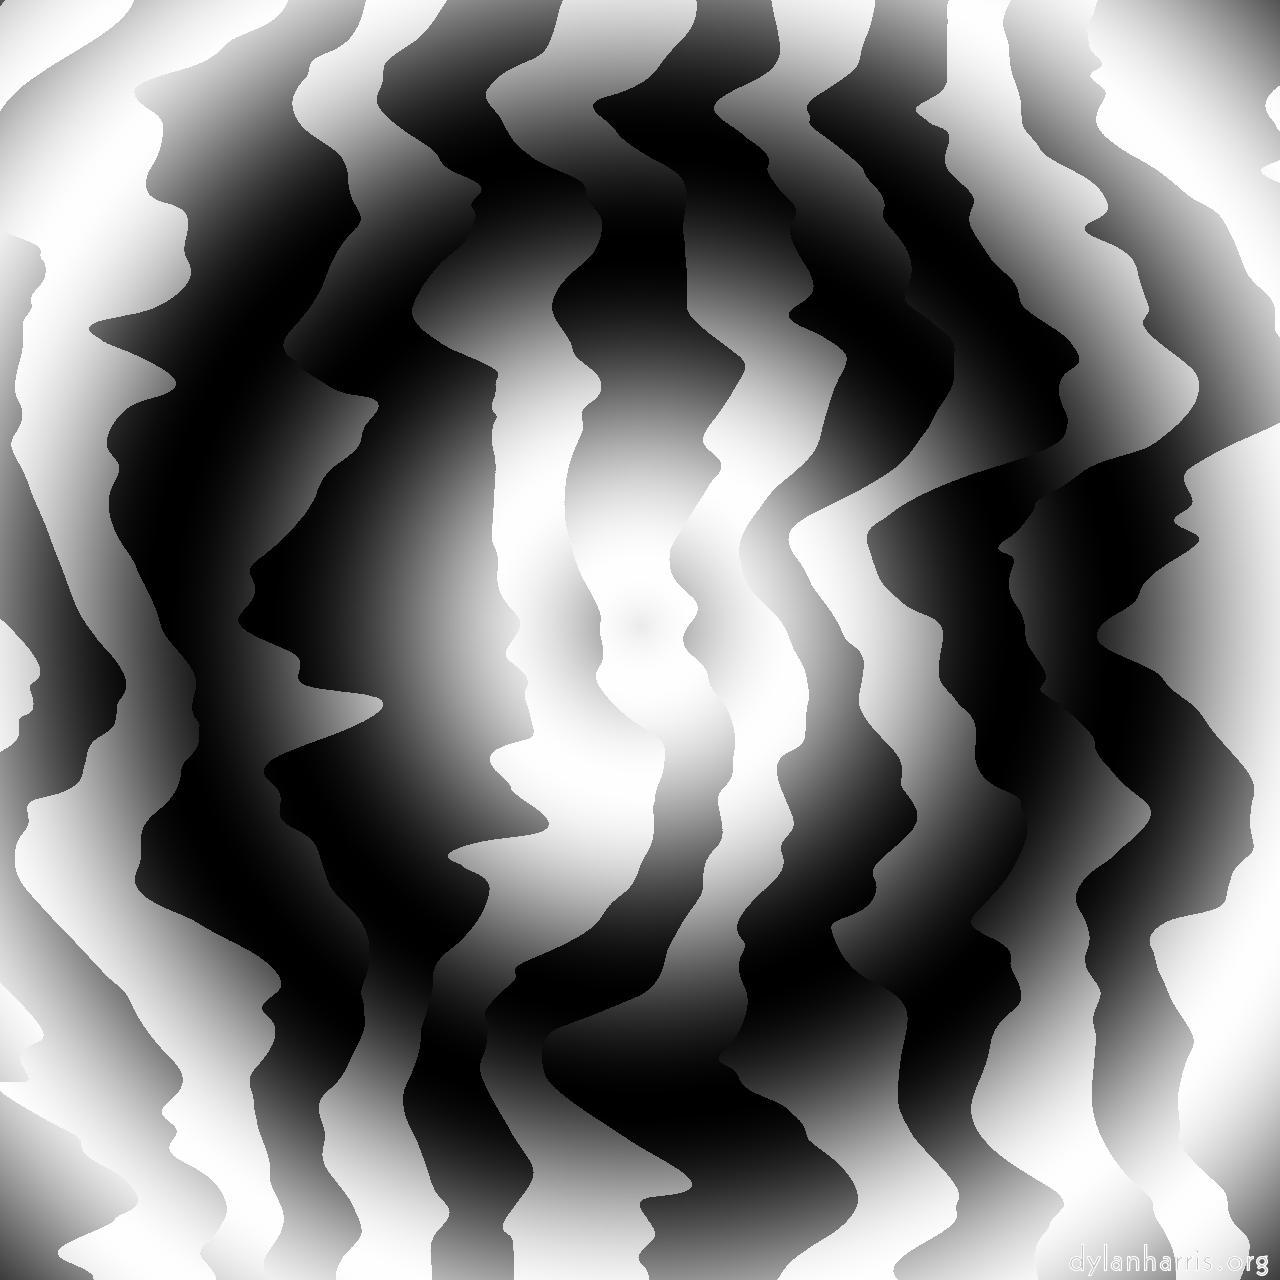 image: pen modulation 2 :: waves intersecting 1 circles